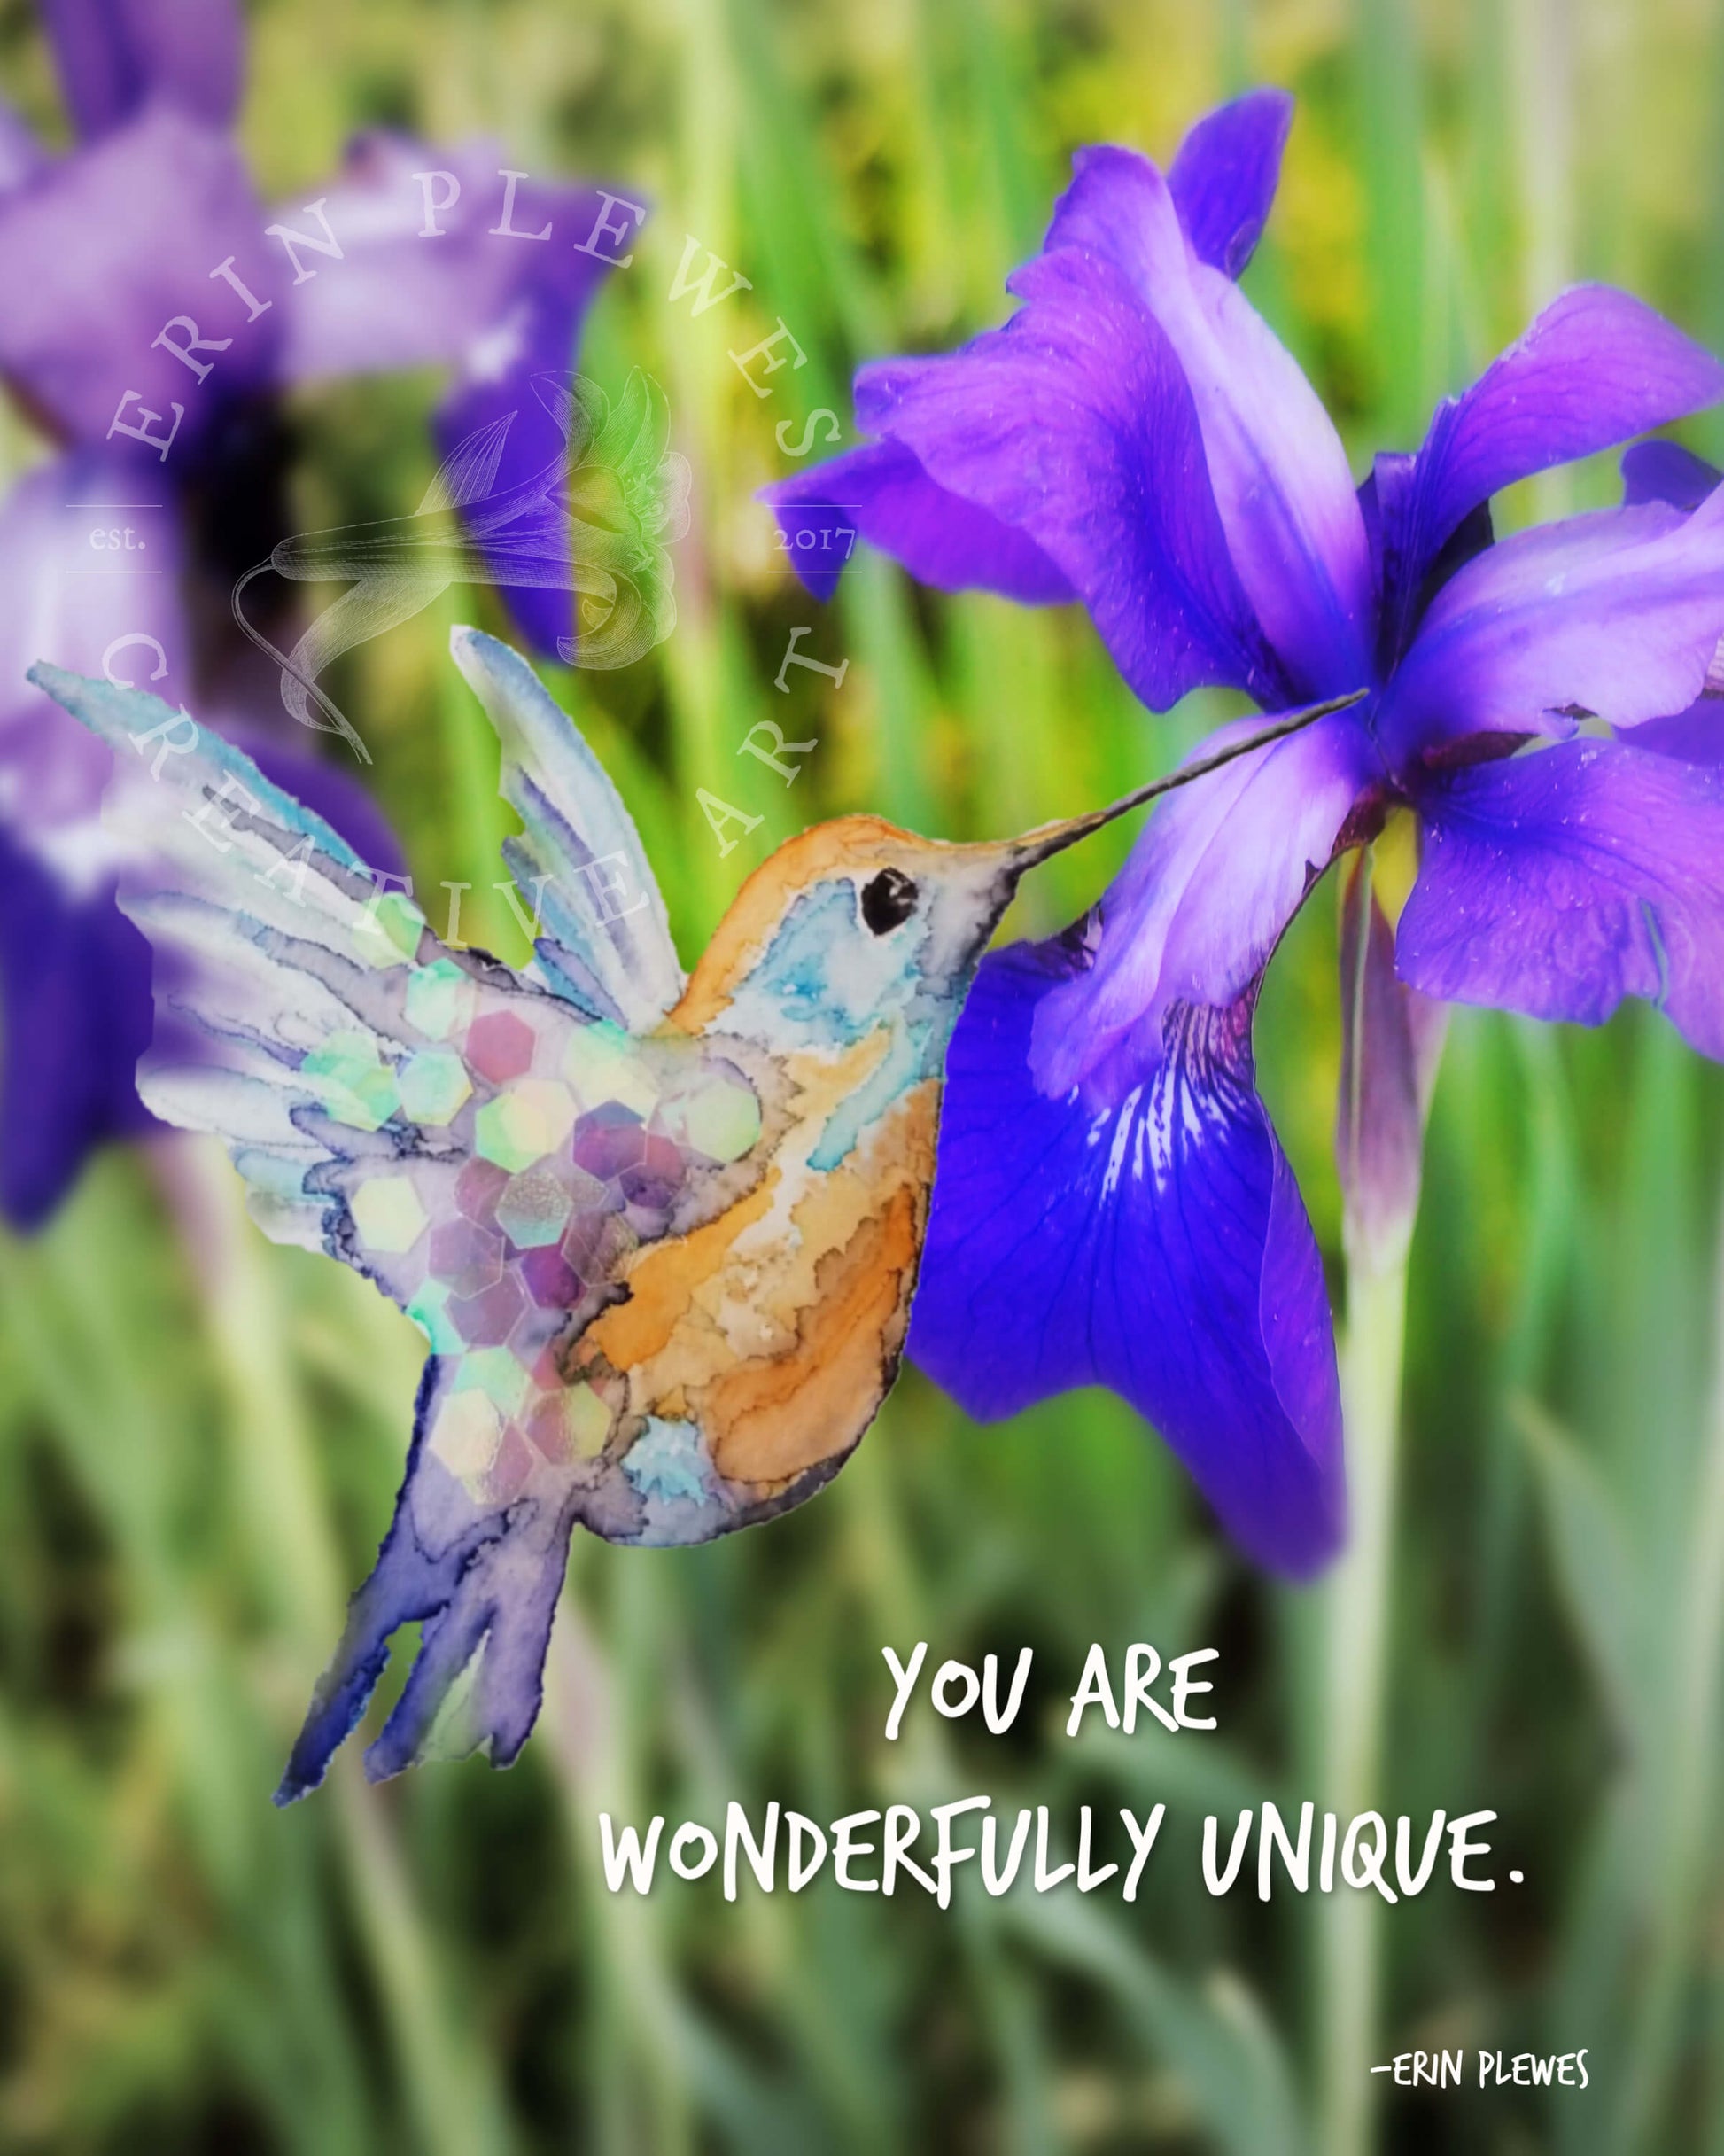 Erin Plewes Creative Art – Wonderfully Unique Iris Bird Wall Art Inspirational Watercolor Print 8x10